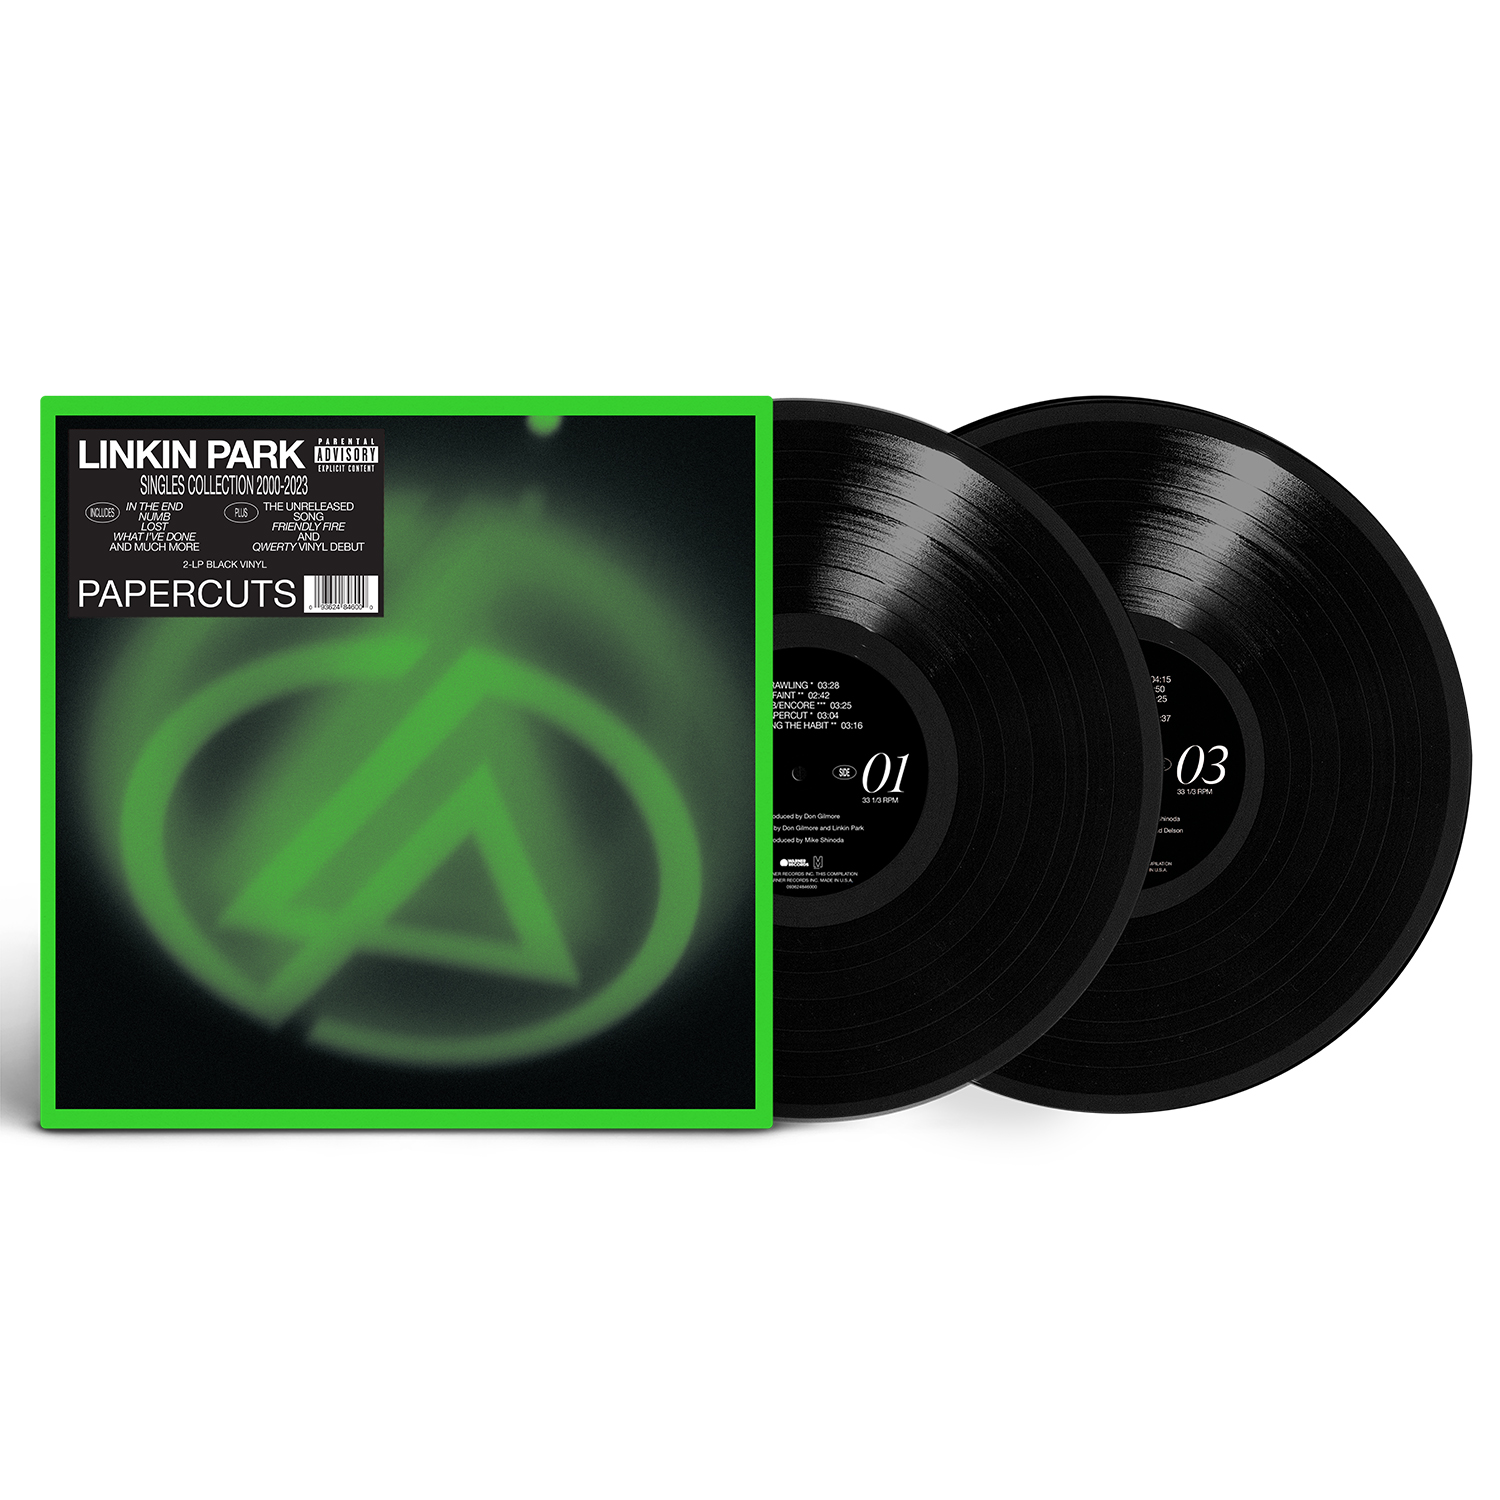 Linkin Park: One More Light Vinyl LP —